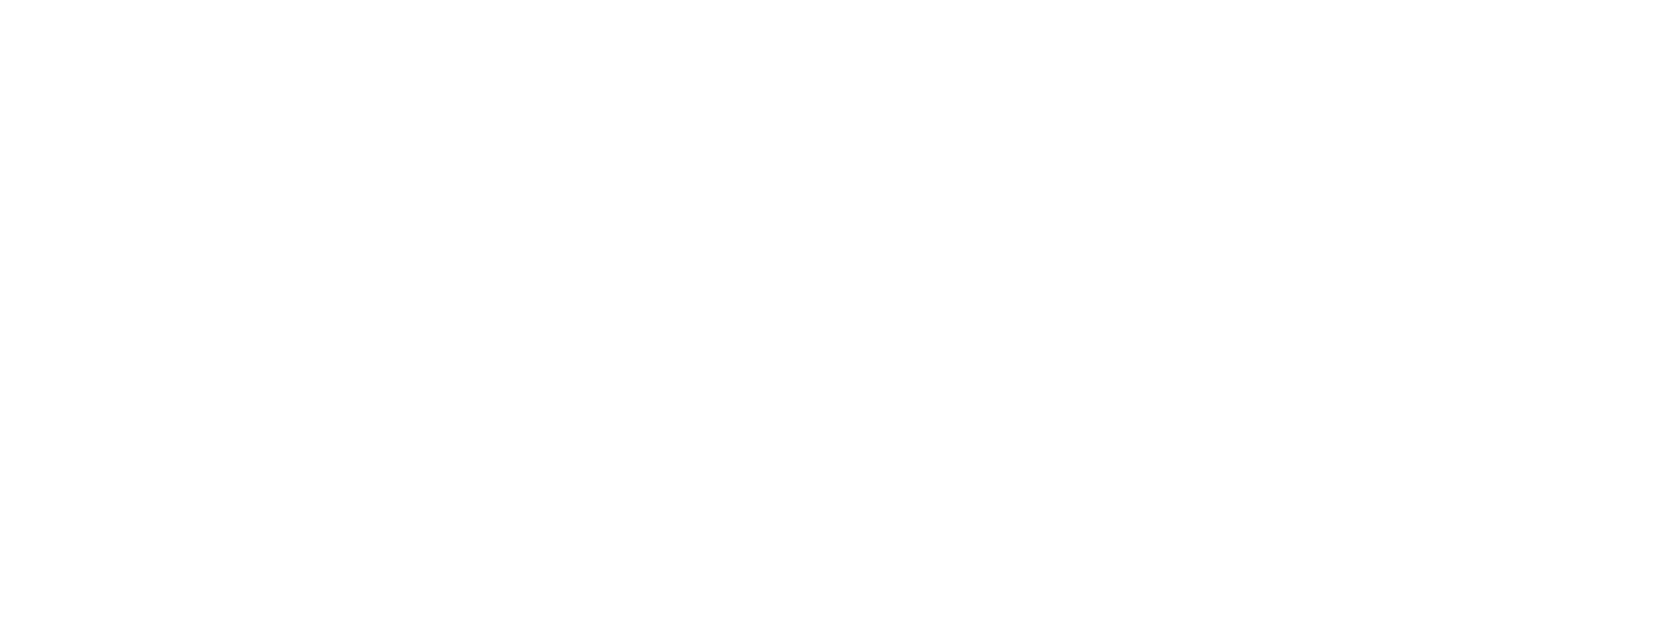 Food Shippers of America Logo no tagline Reverse White